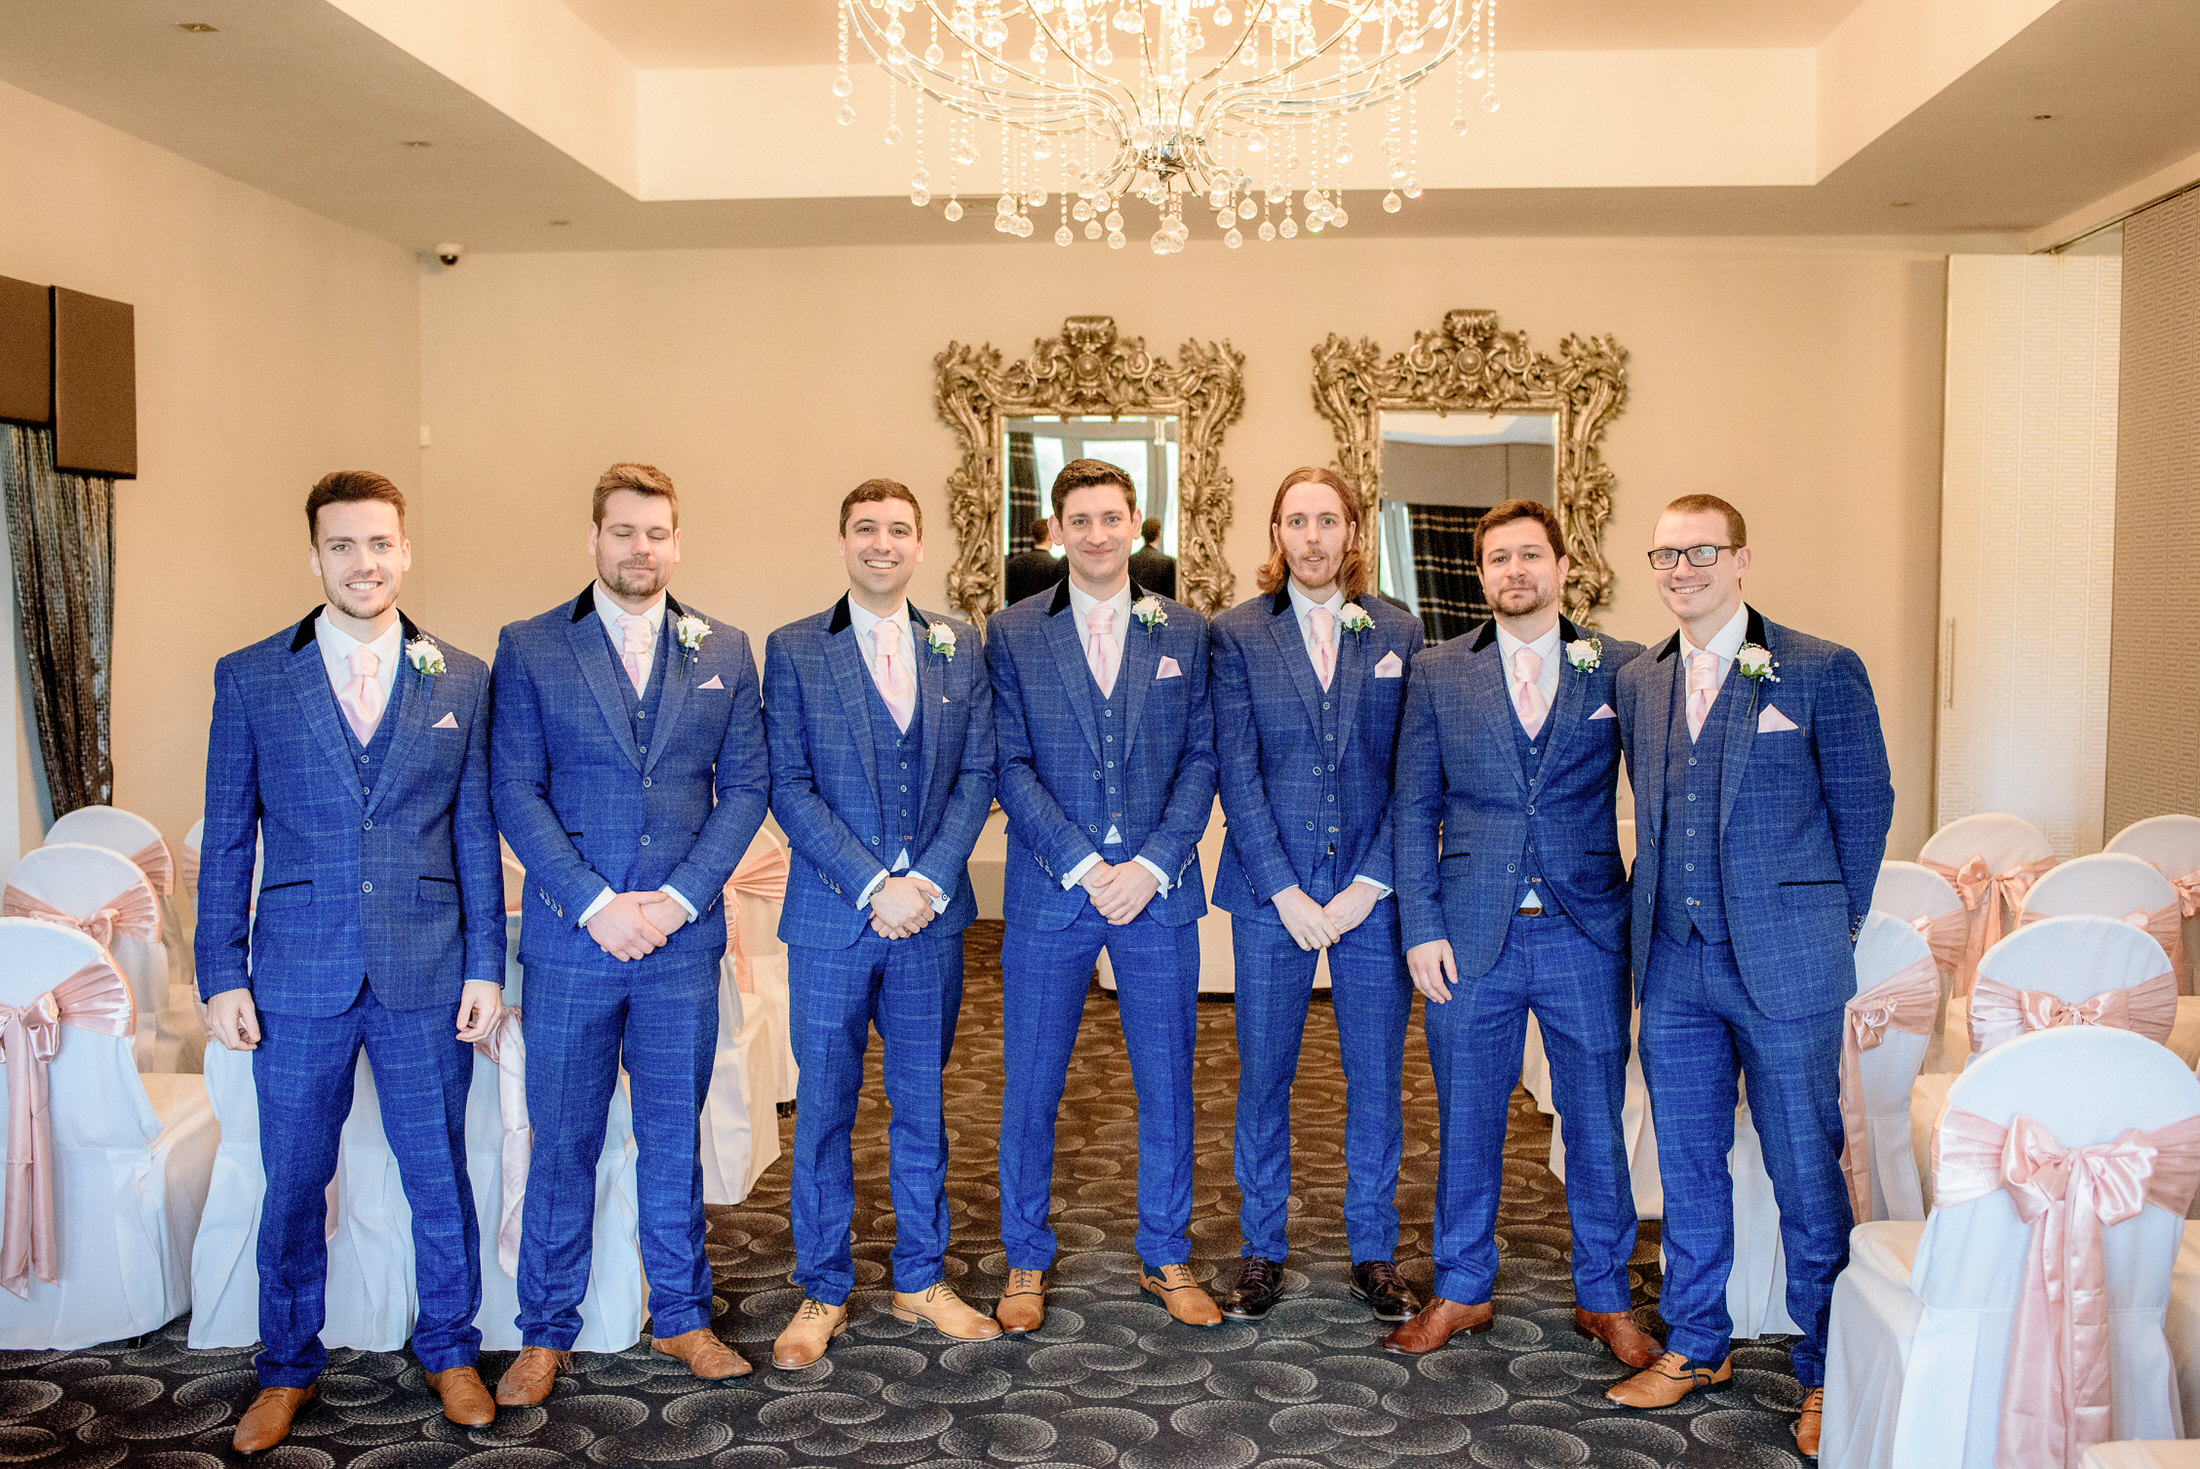 Groomsmen standing in front of a chandelier at a Brackenborough Hotel wedding.